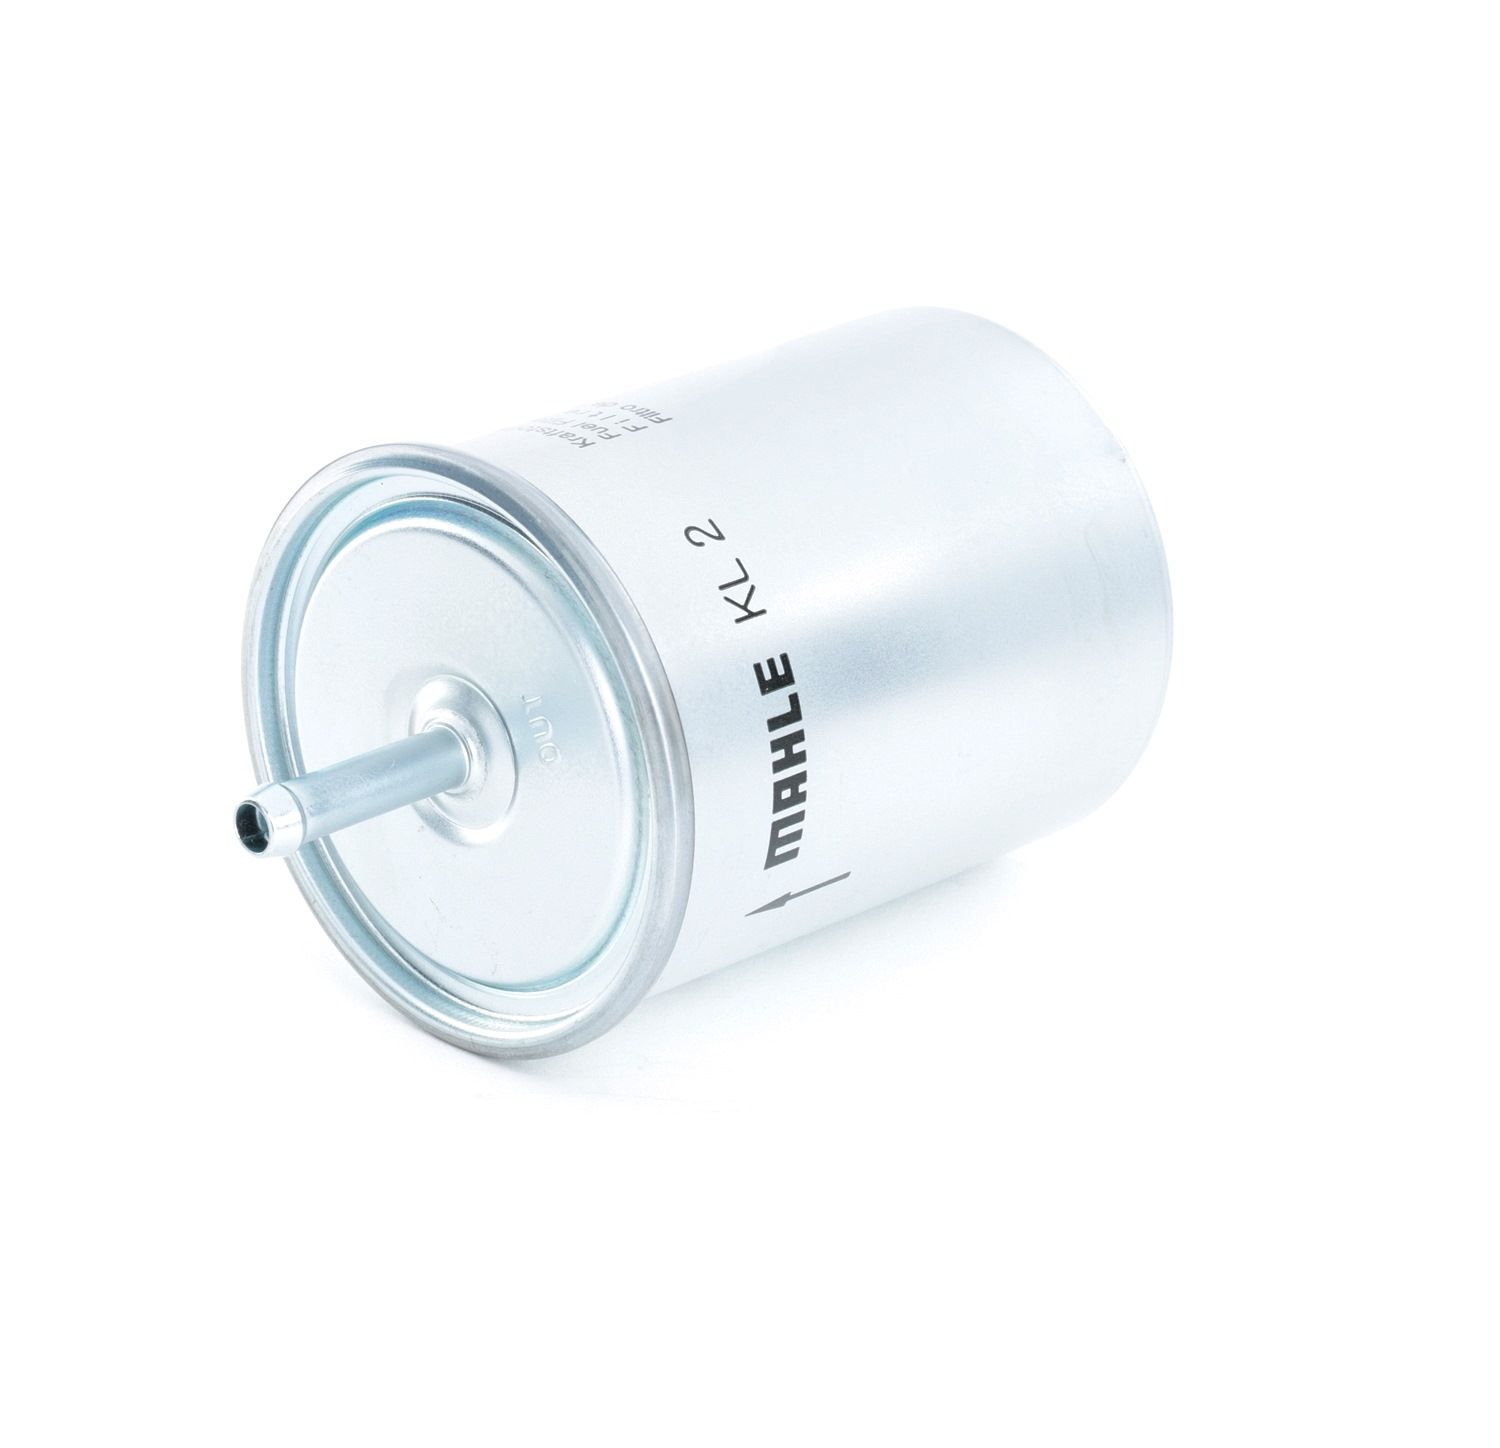 MAHLE ORIGINAL KL 2 originální HYUNDAI i30 2016 Palivový filtr Filtr zabudovaný do potrubí, 8mm, 8,0mm